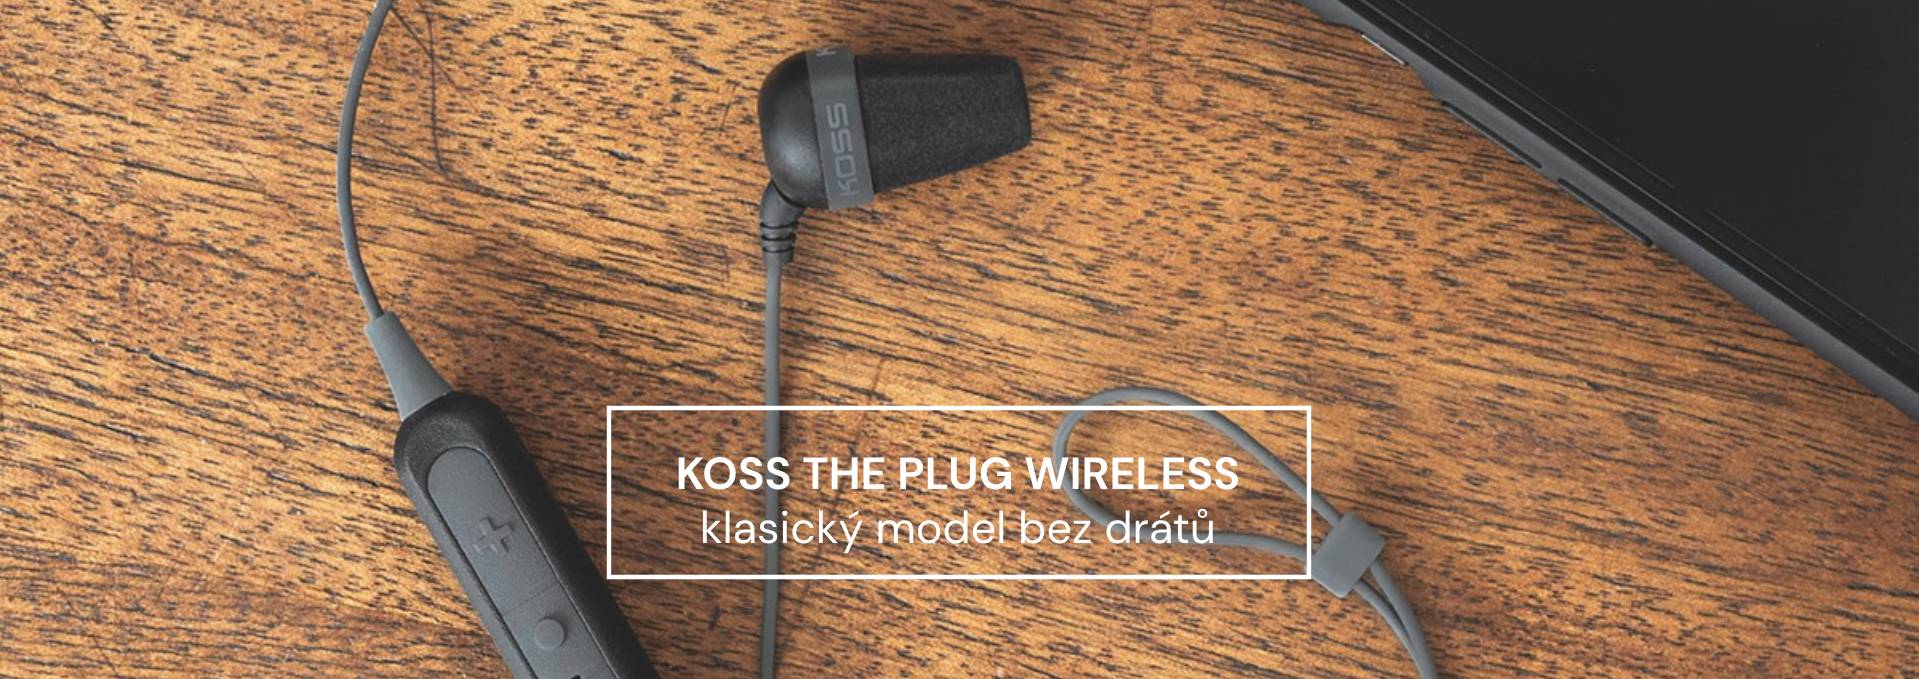 KOSS THE PLUG Wireless